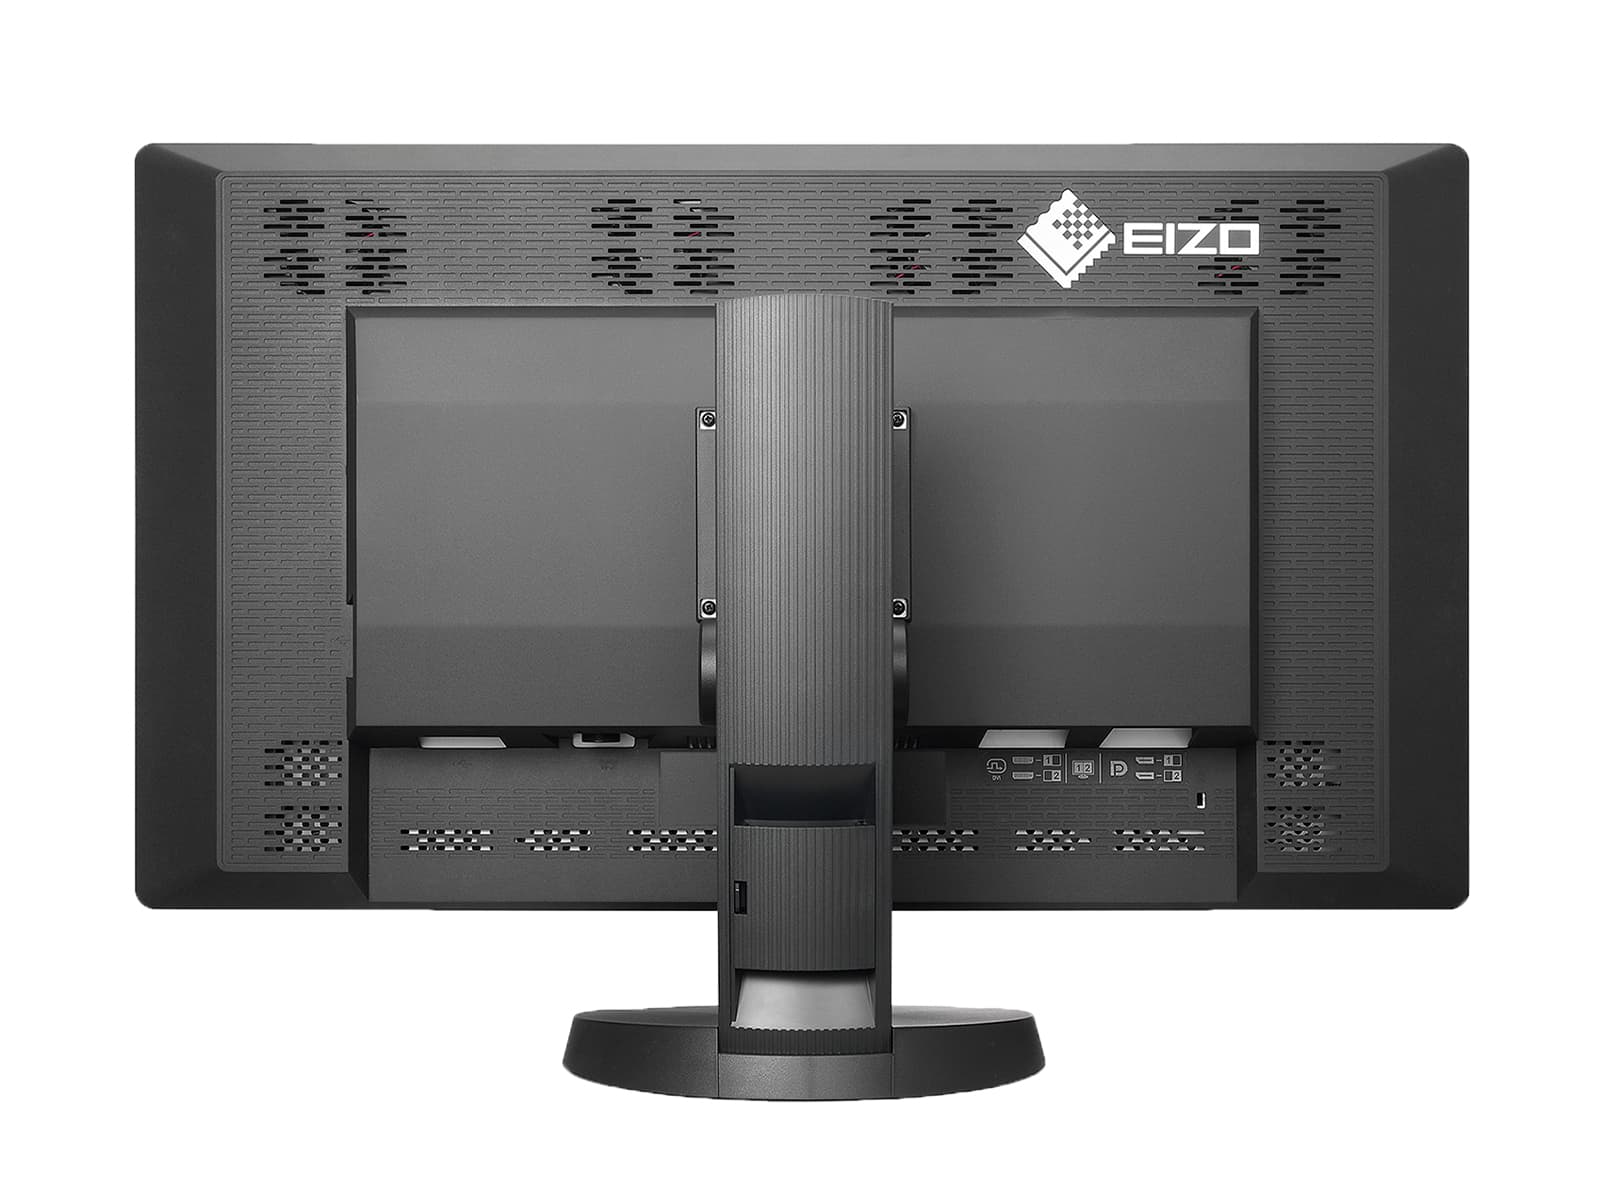 Eizo RadiForce RX850 Fusion Color LED Mammo 3D-DBT Breast Imaging Display (RX850-BK) Monitors.com 